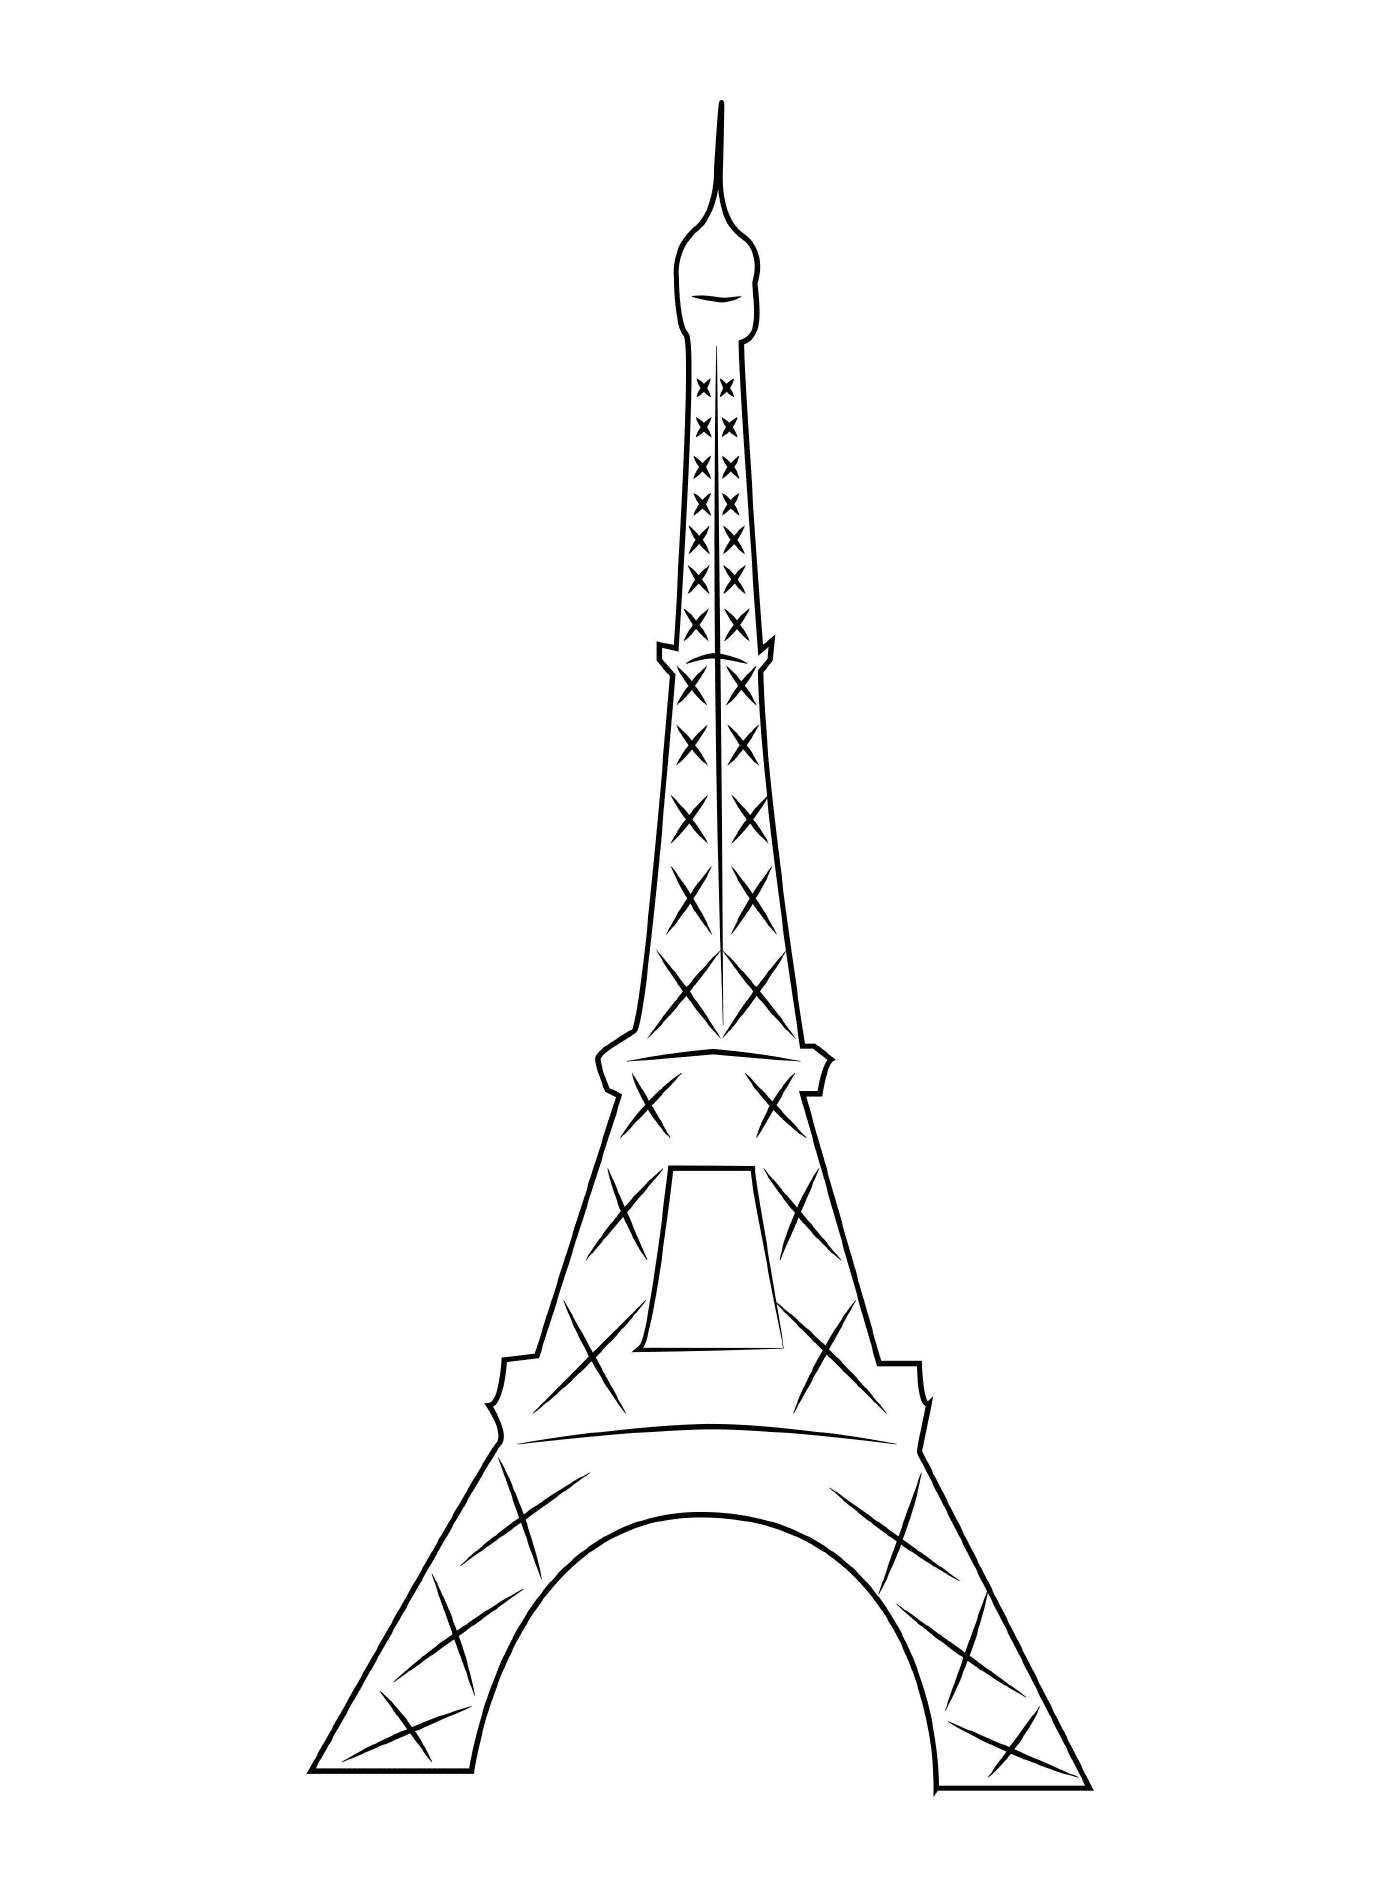  पैरिस की प्रतीकीय इफ़ॆल टॉवर 